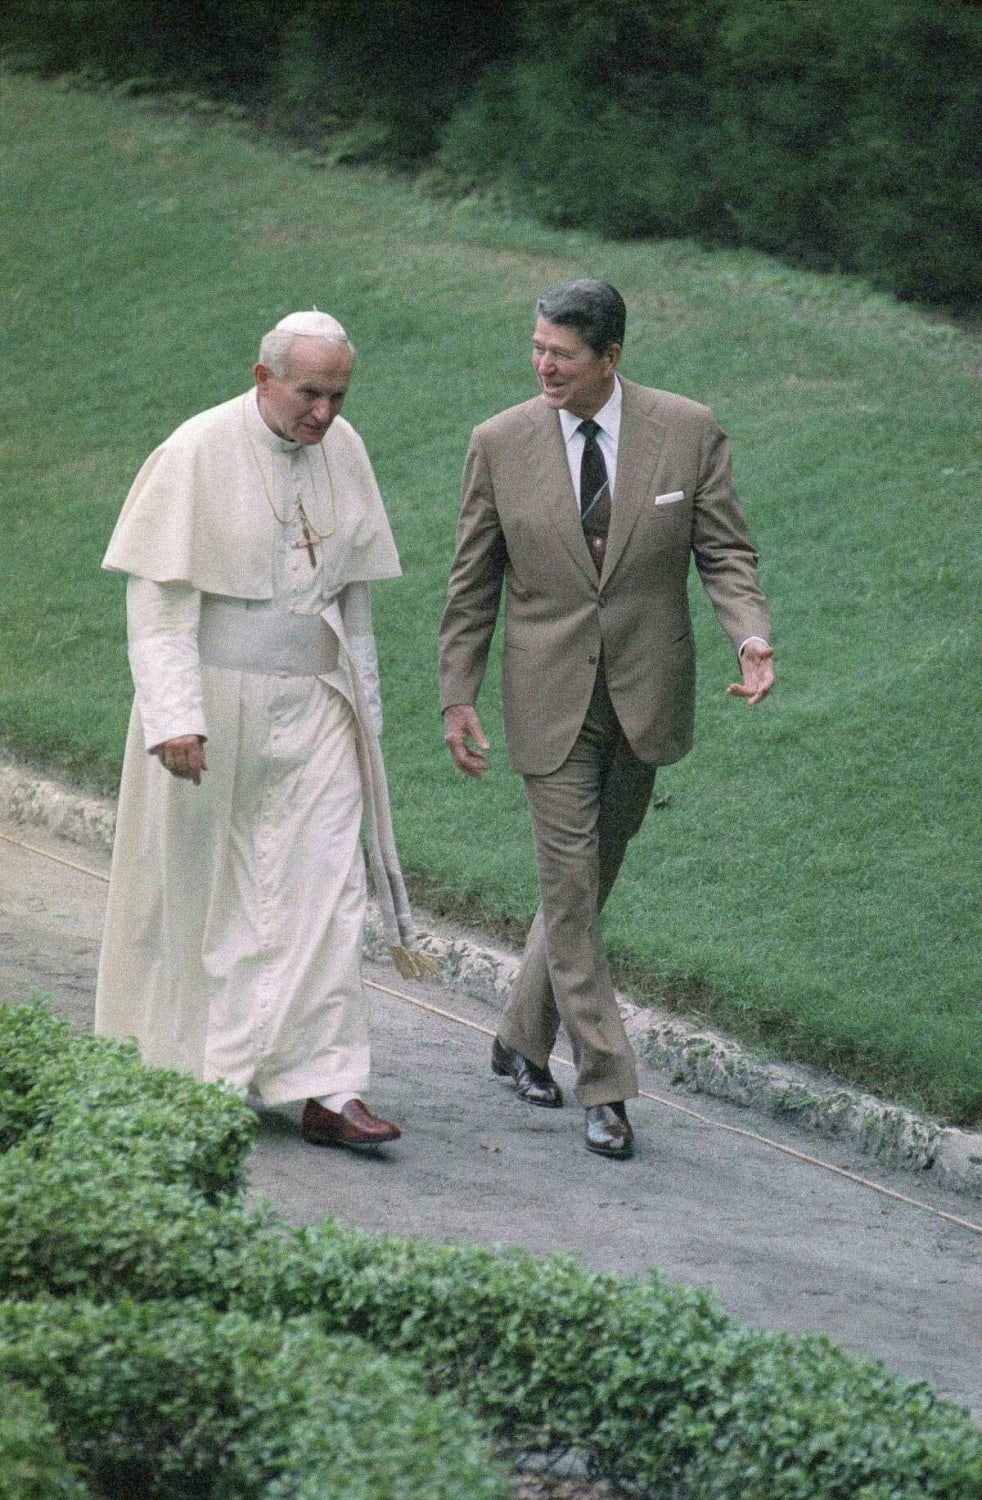 Pope John Paul II and Ronald Reagan in park in Miami, 10th September 1987